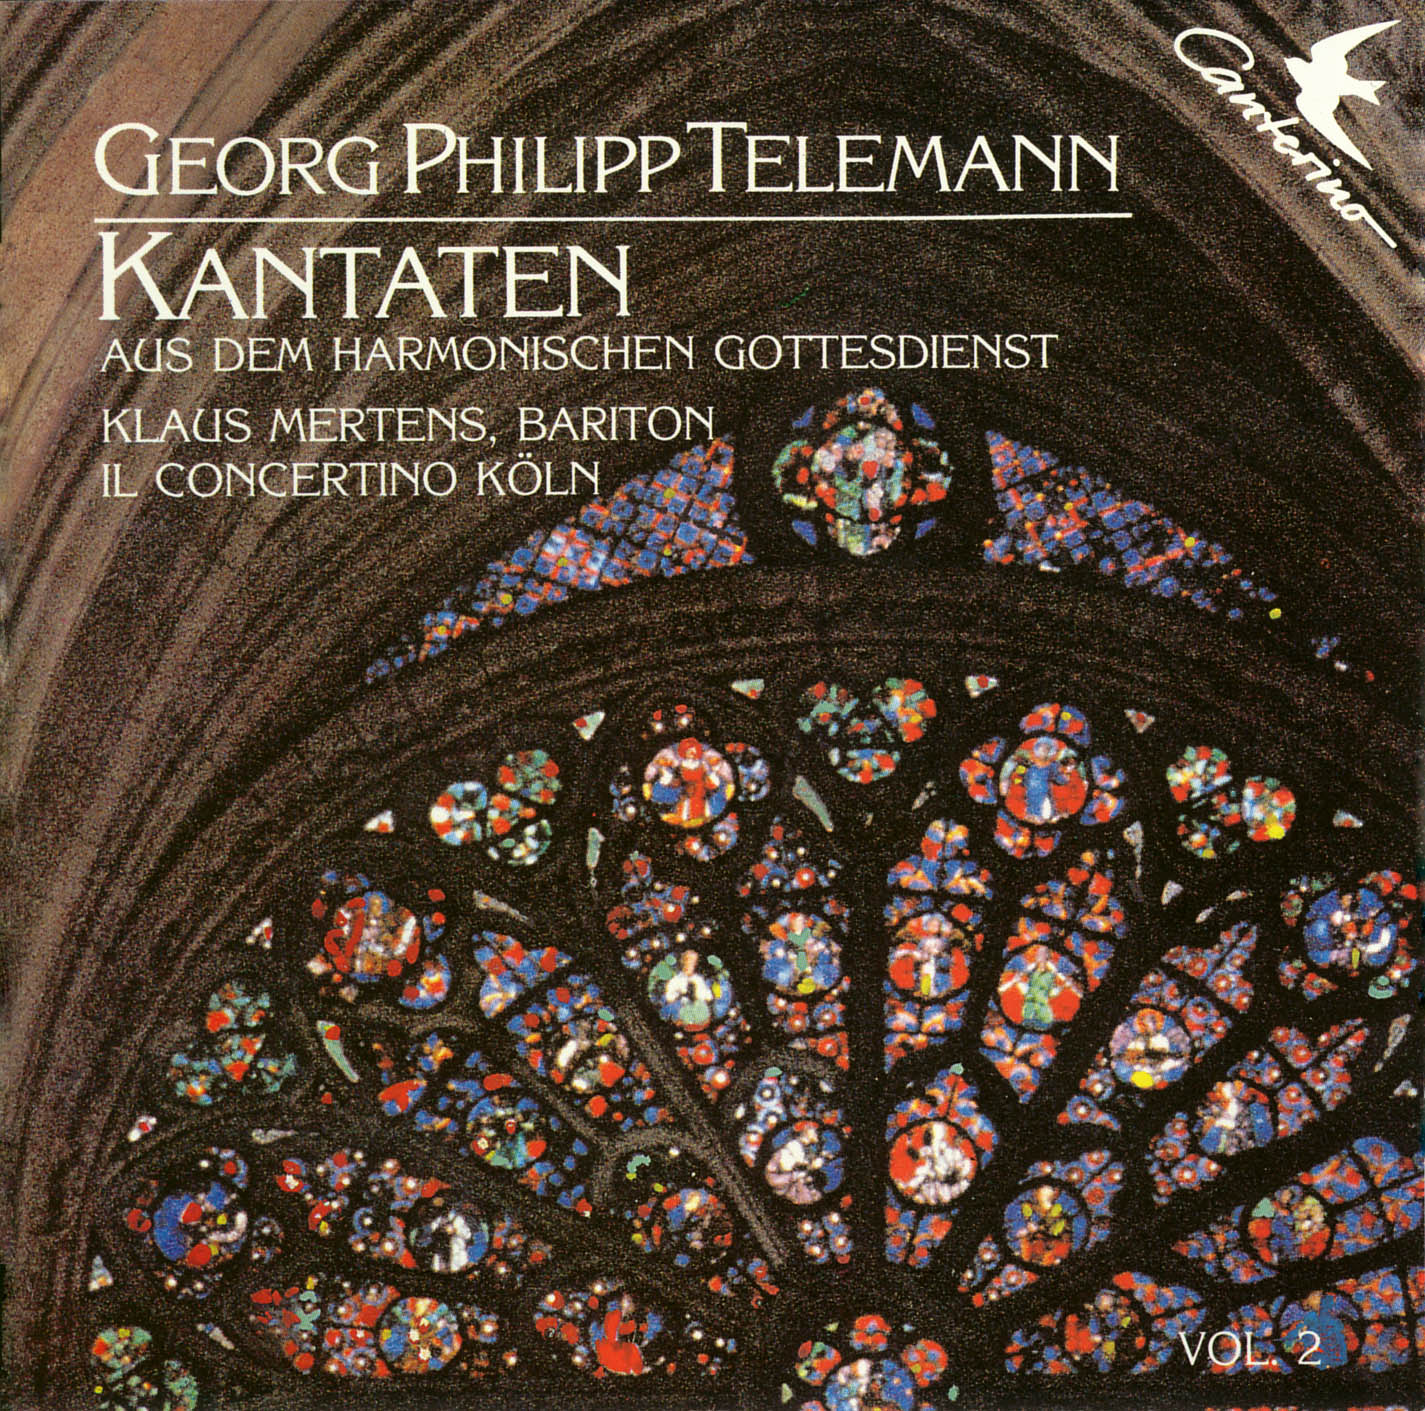 Musica sacra Vol. 2: Telemann